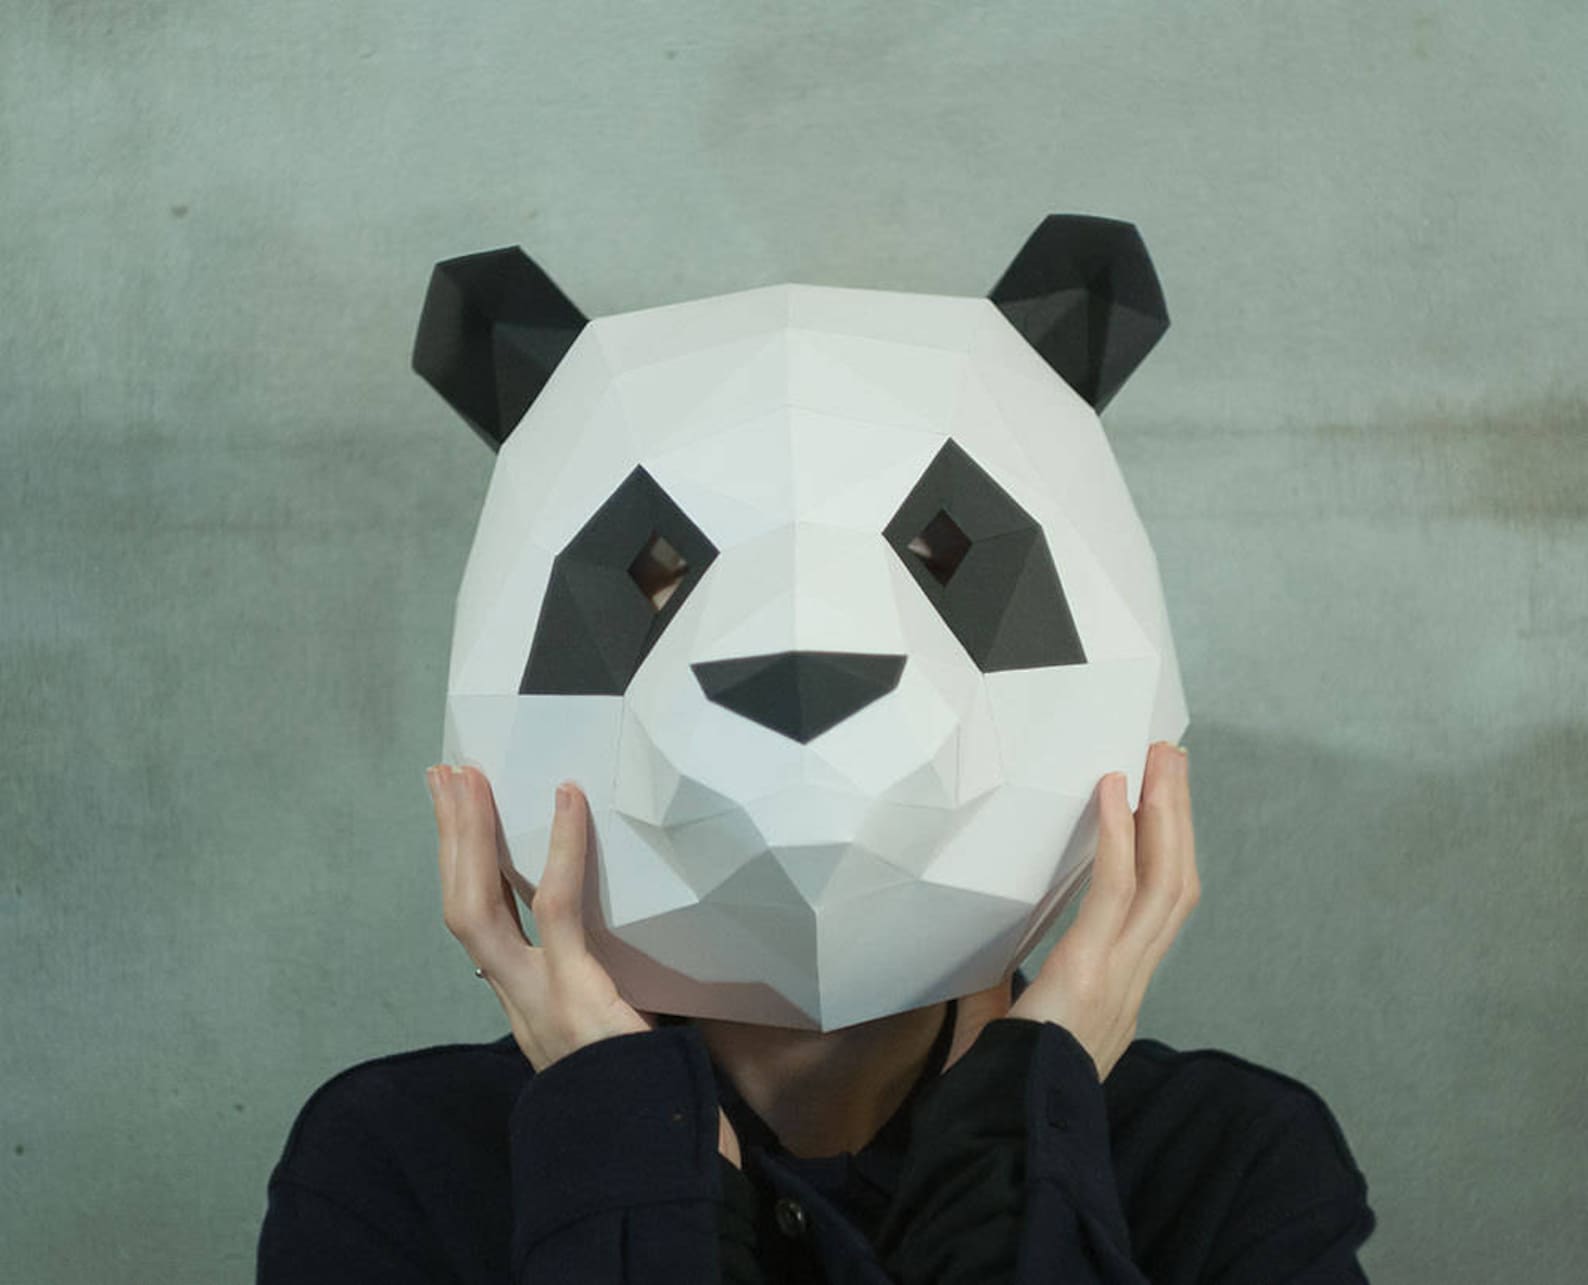 3д маска из бумаги. Полигональный маски Панда. Паперкрафт маска панды. Панда пейперкрафт. Объемная маска.